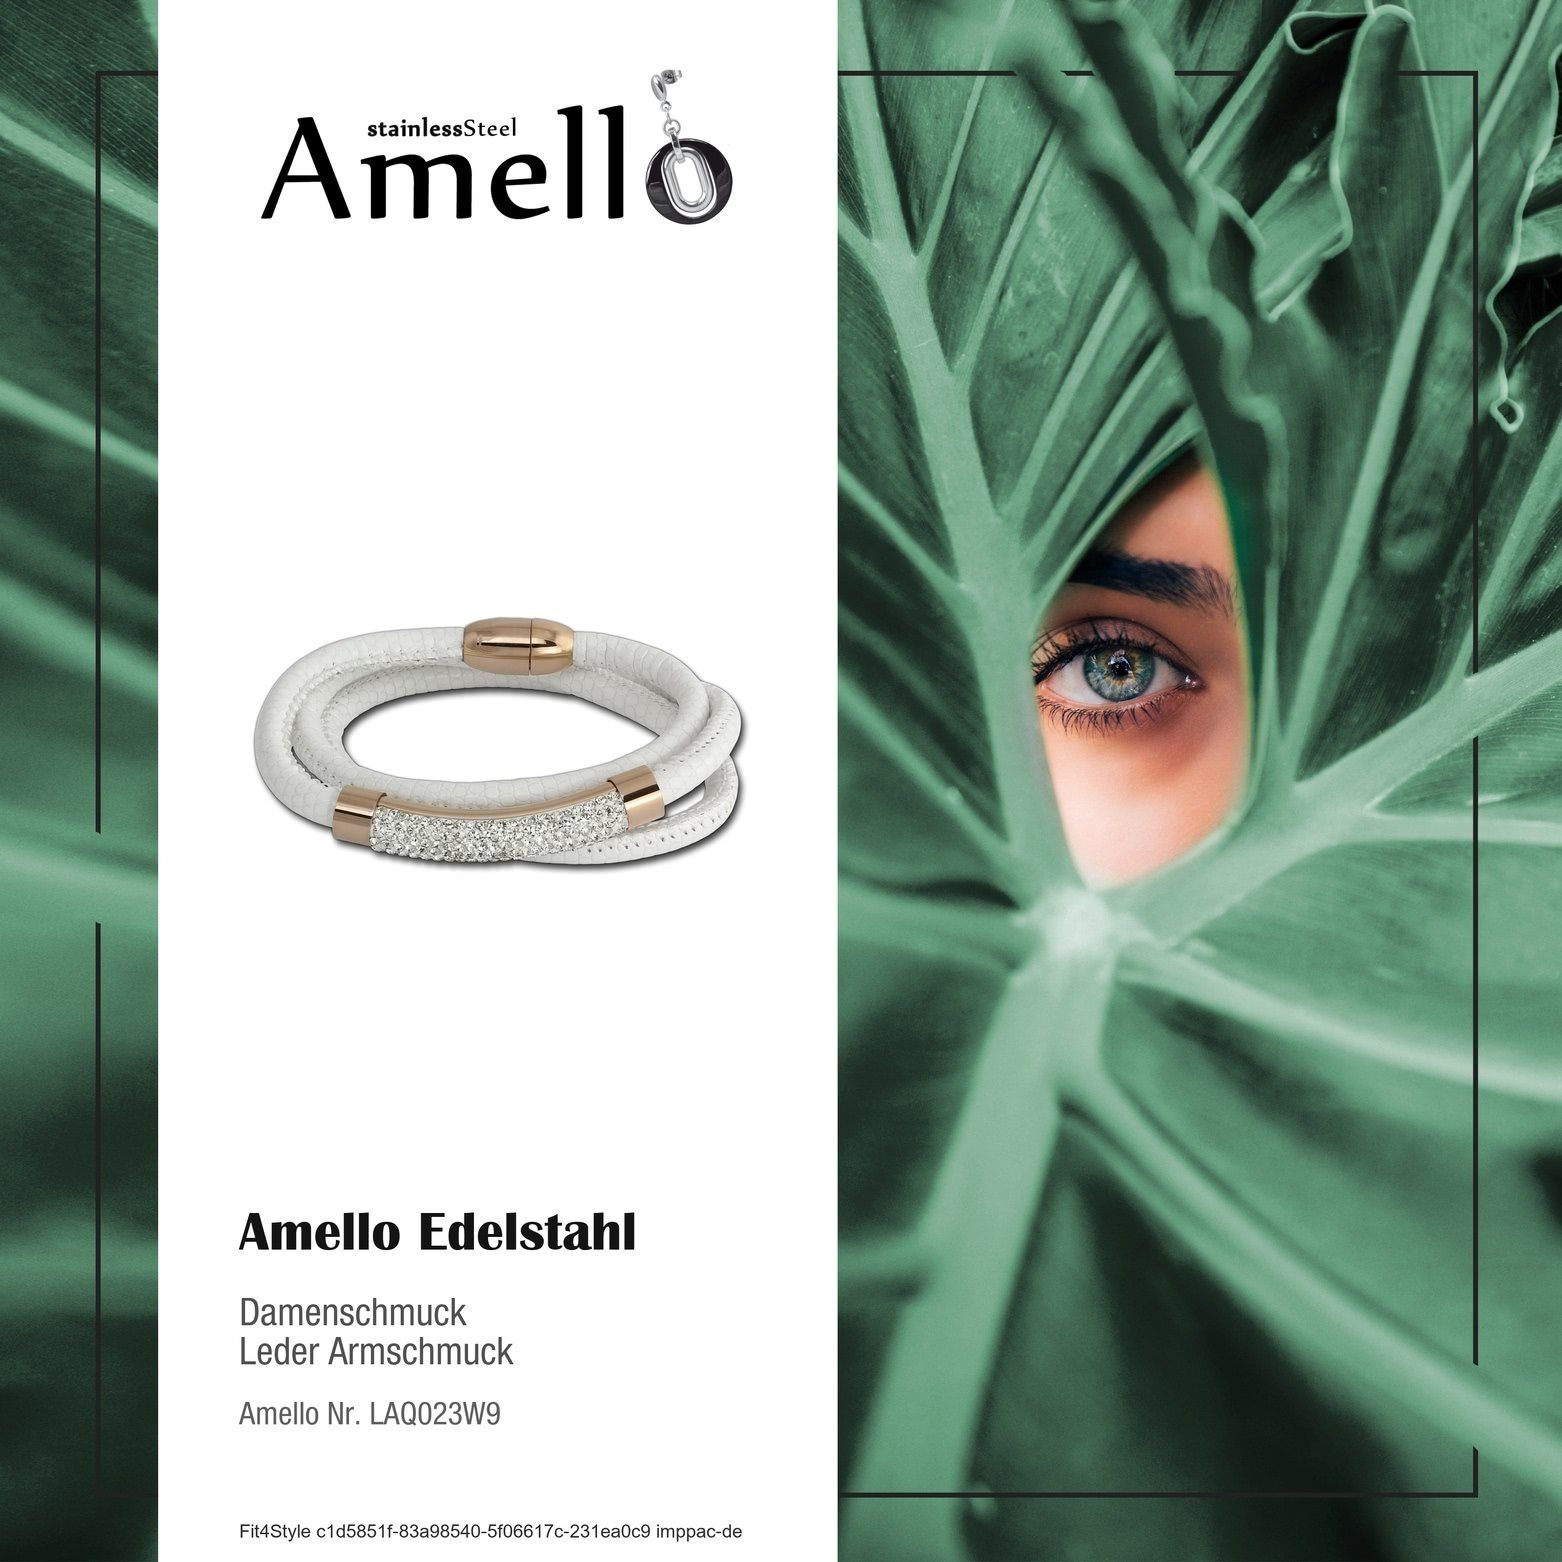 Amello Edelstahlarmband Amello Zirkonia Armband Steel), Damen (Stainless (Roségold Damen vergoldet Edelstahl Armband (Armband), 333), F Leder